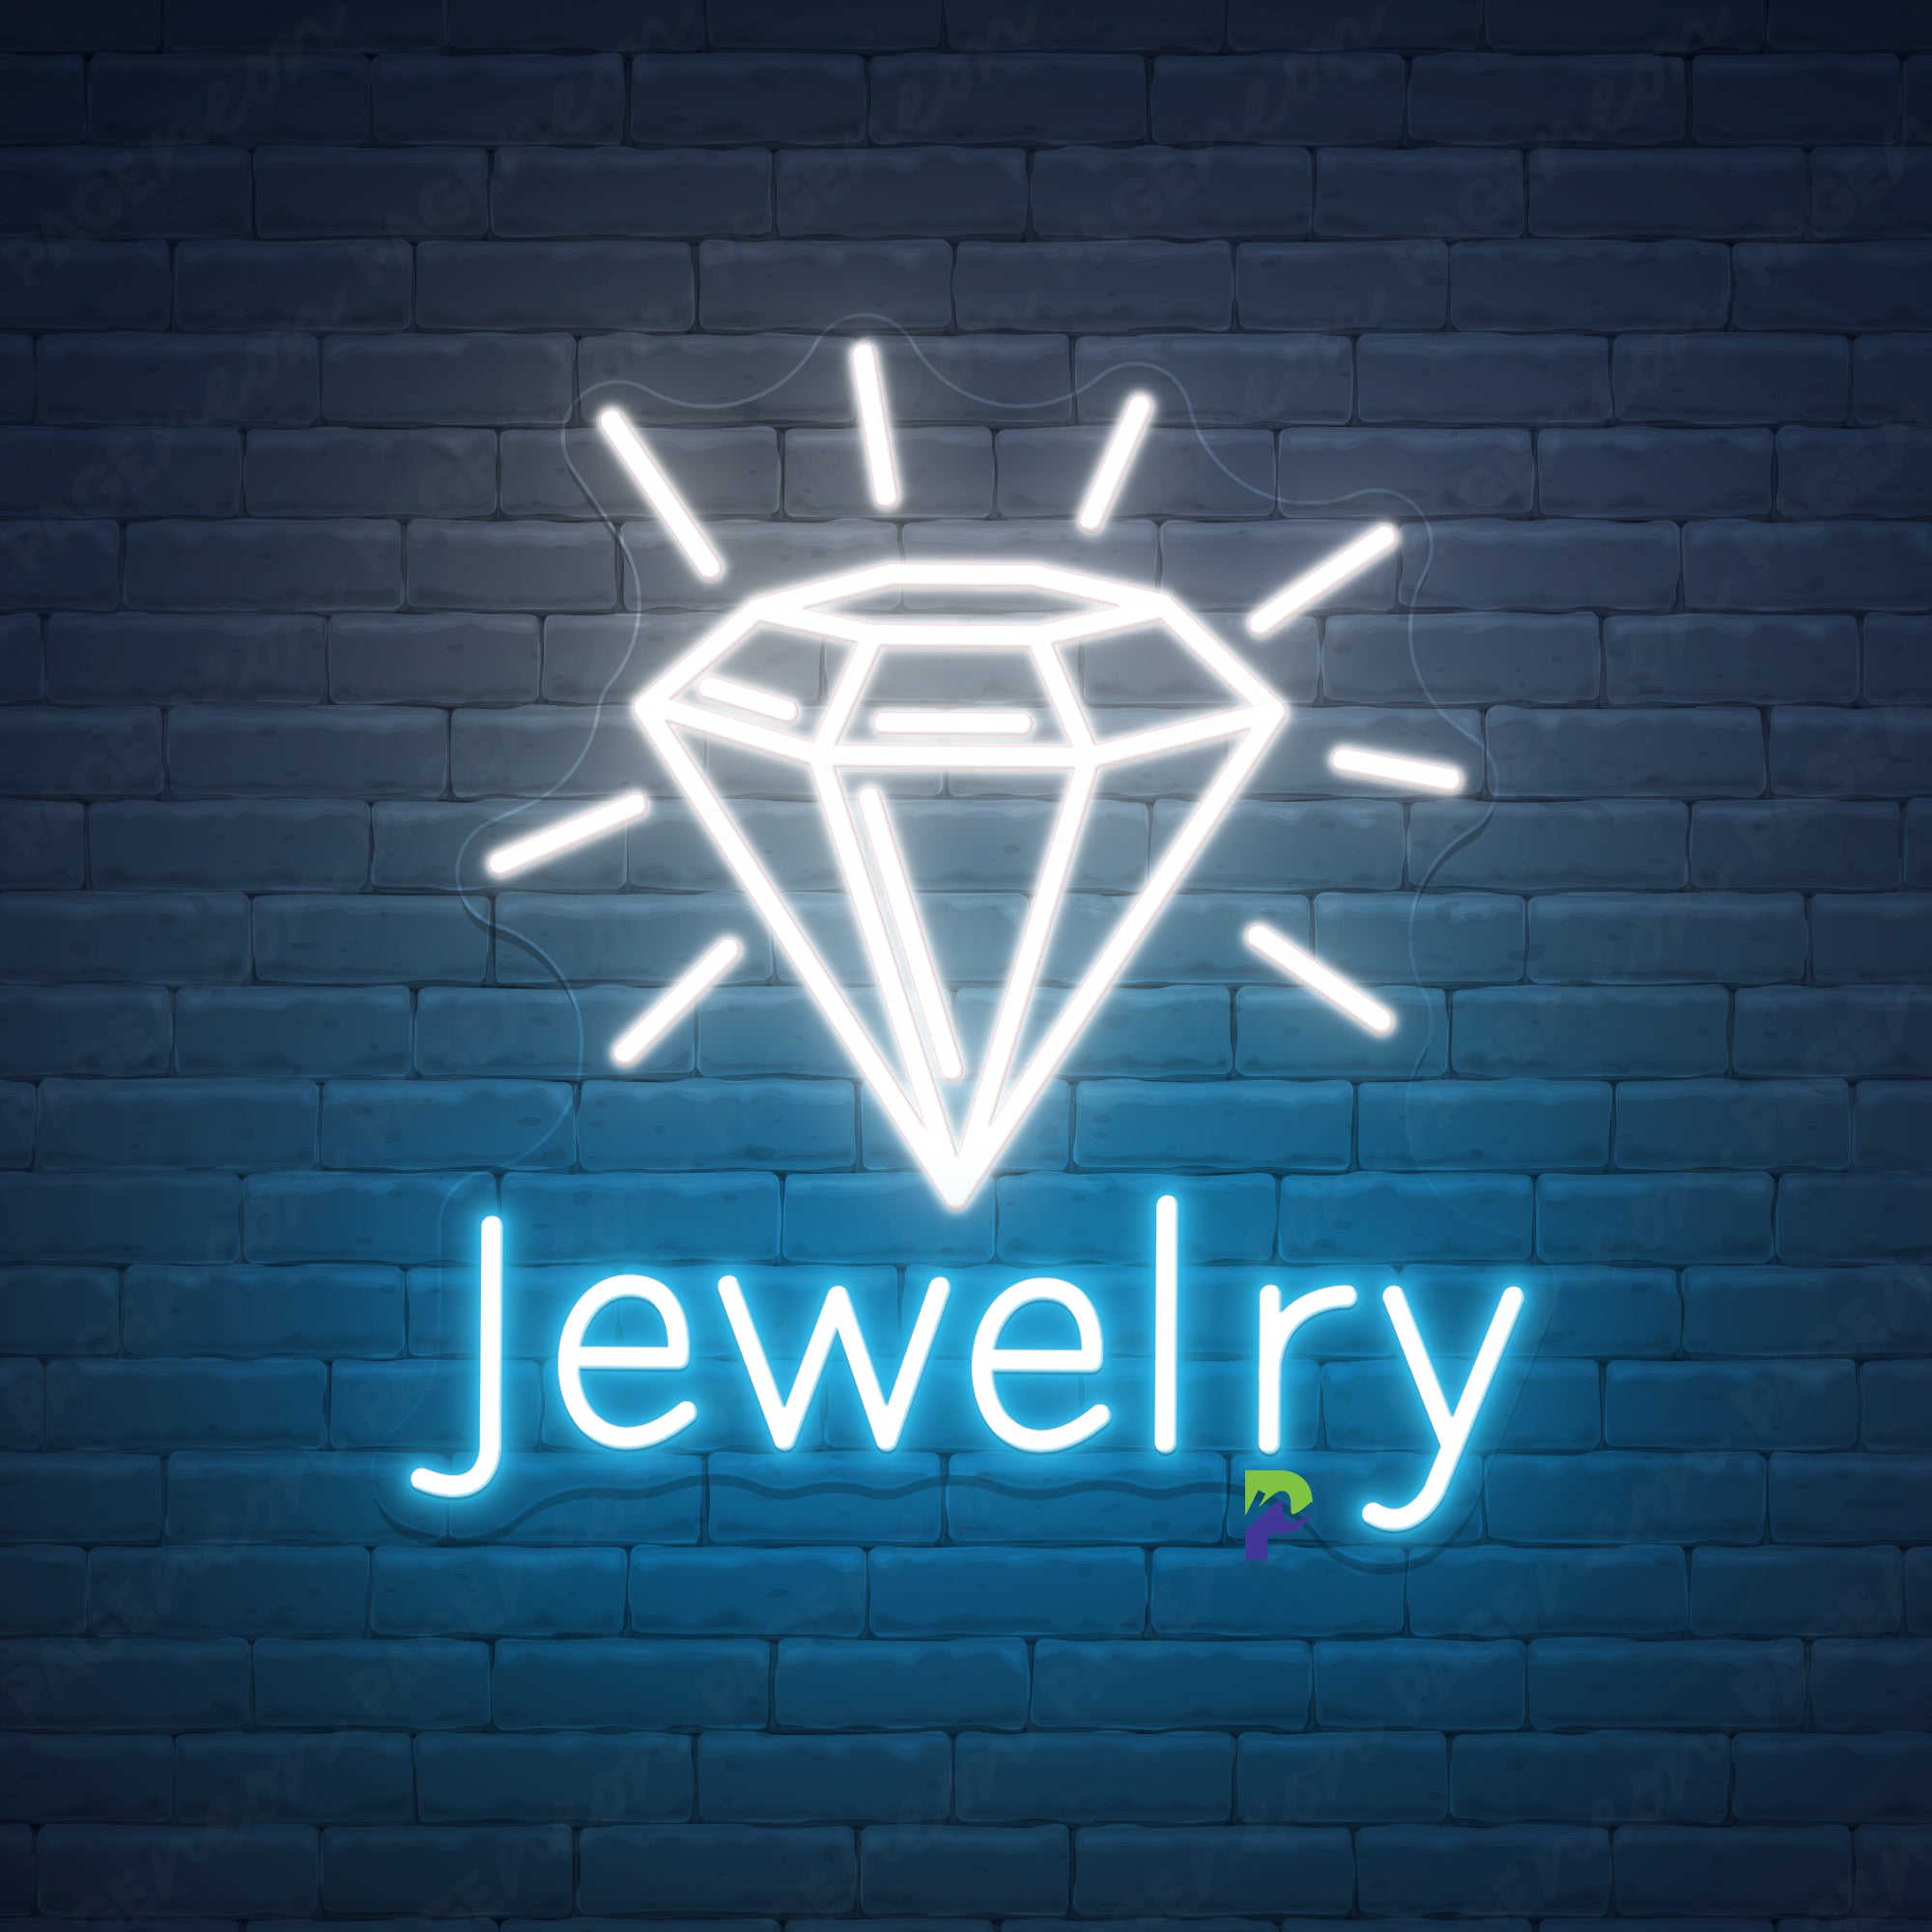 Jewelry Neon Signs Custom Name Led Light